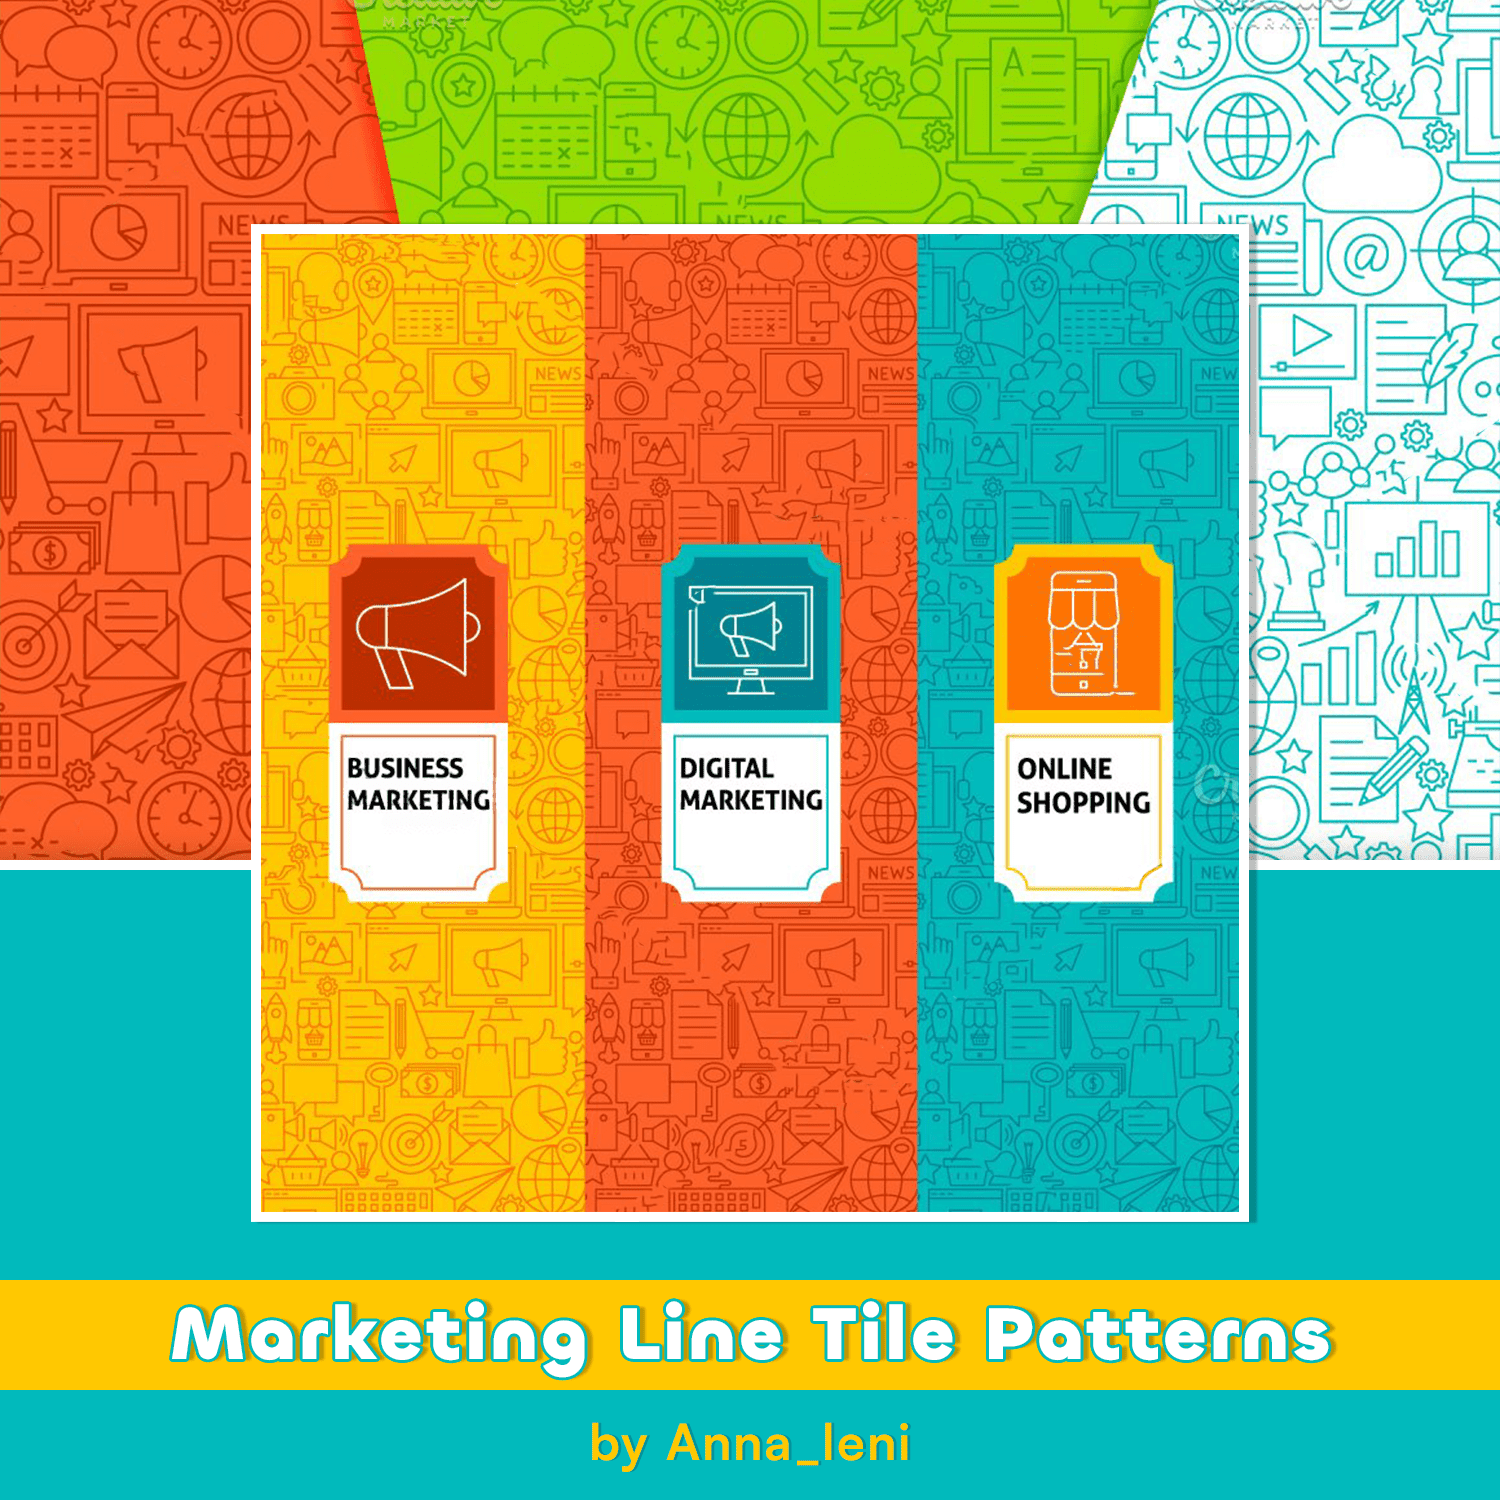 Marketing Line Tile Patterns cover.